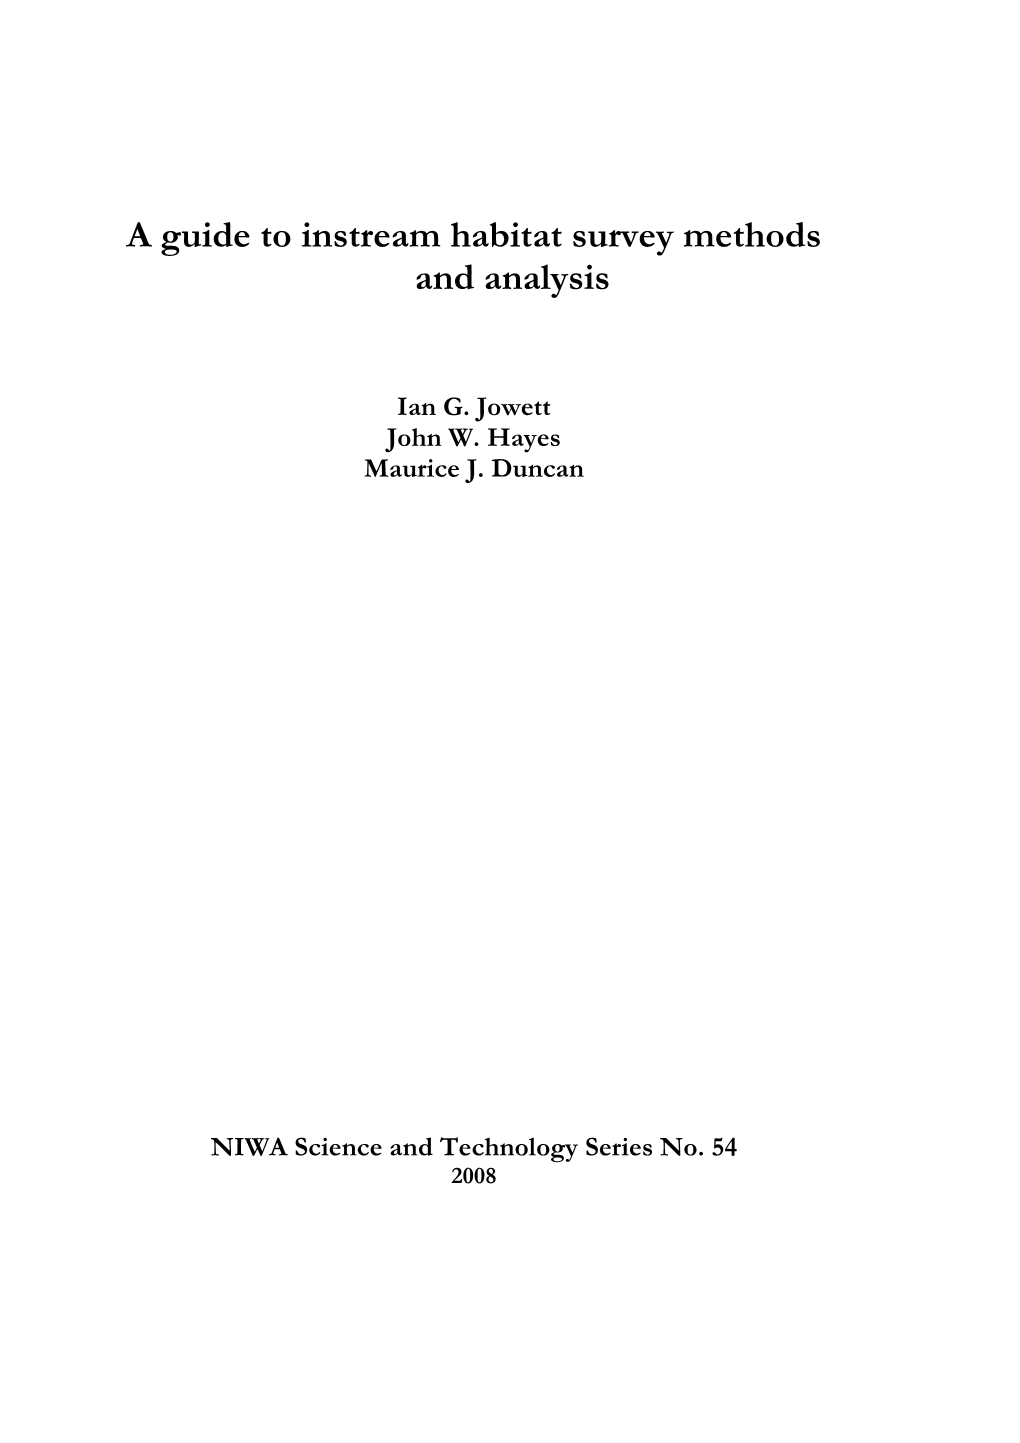 NIWA Guide to Instream Habitat Survey Methods and Analysis